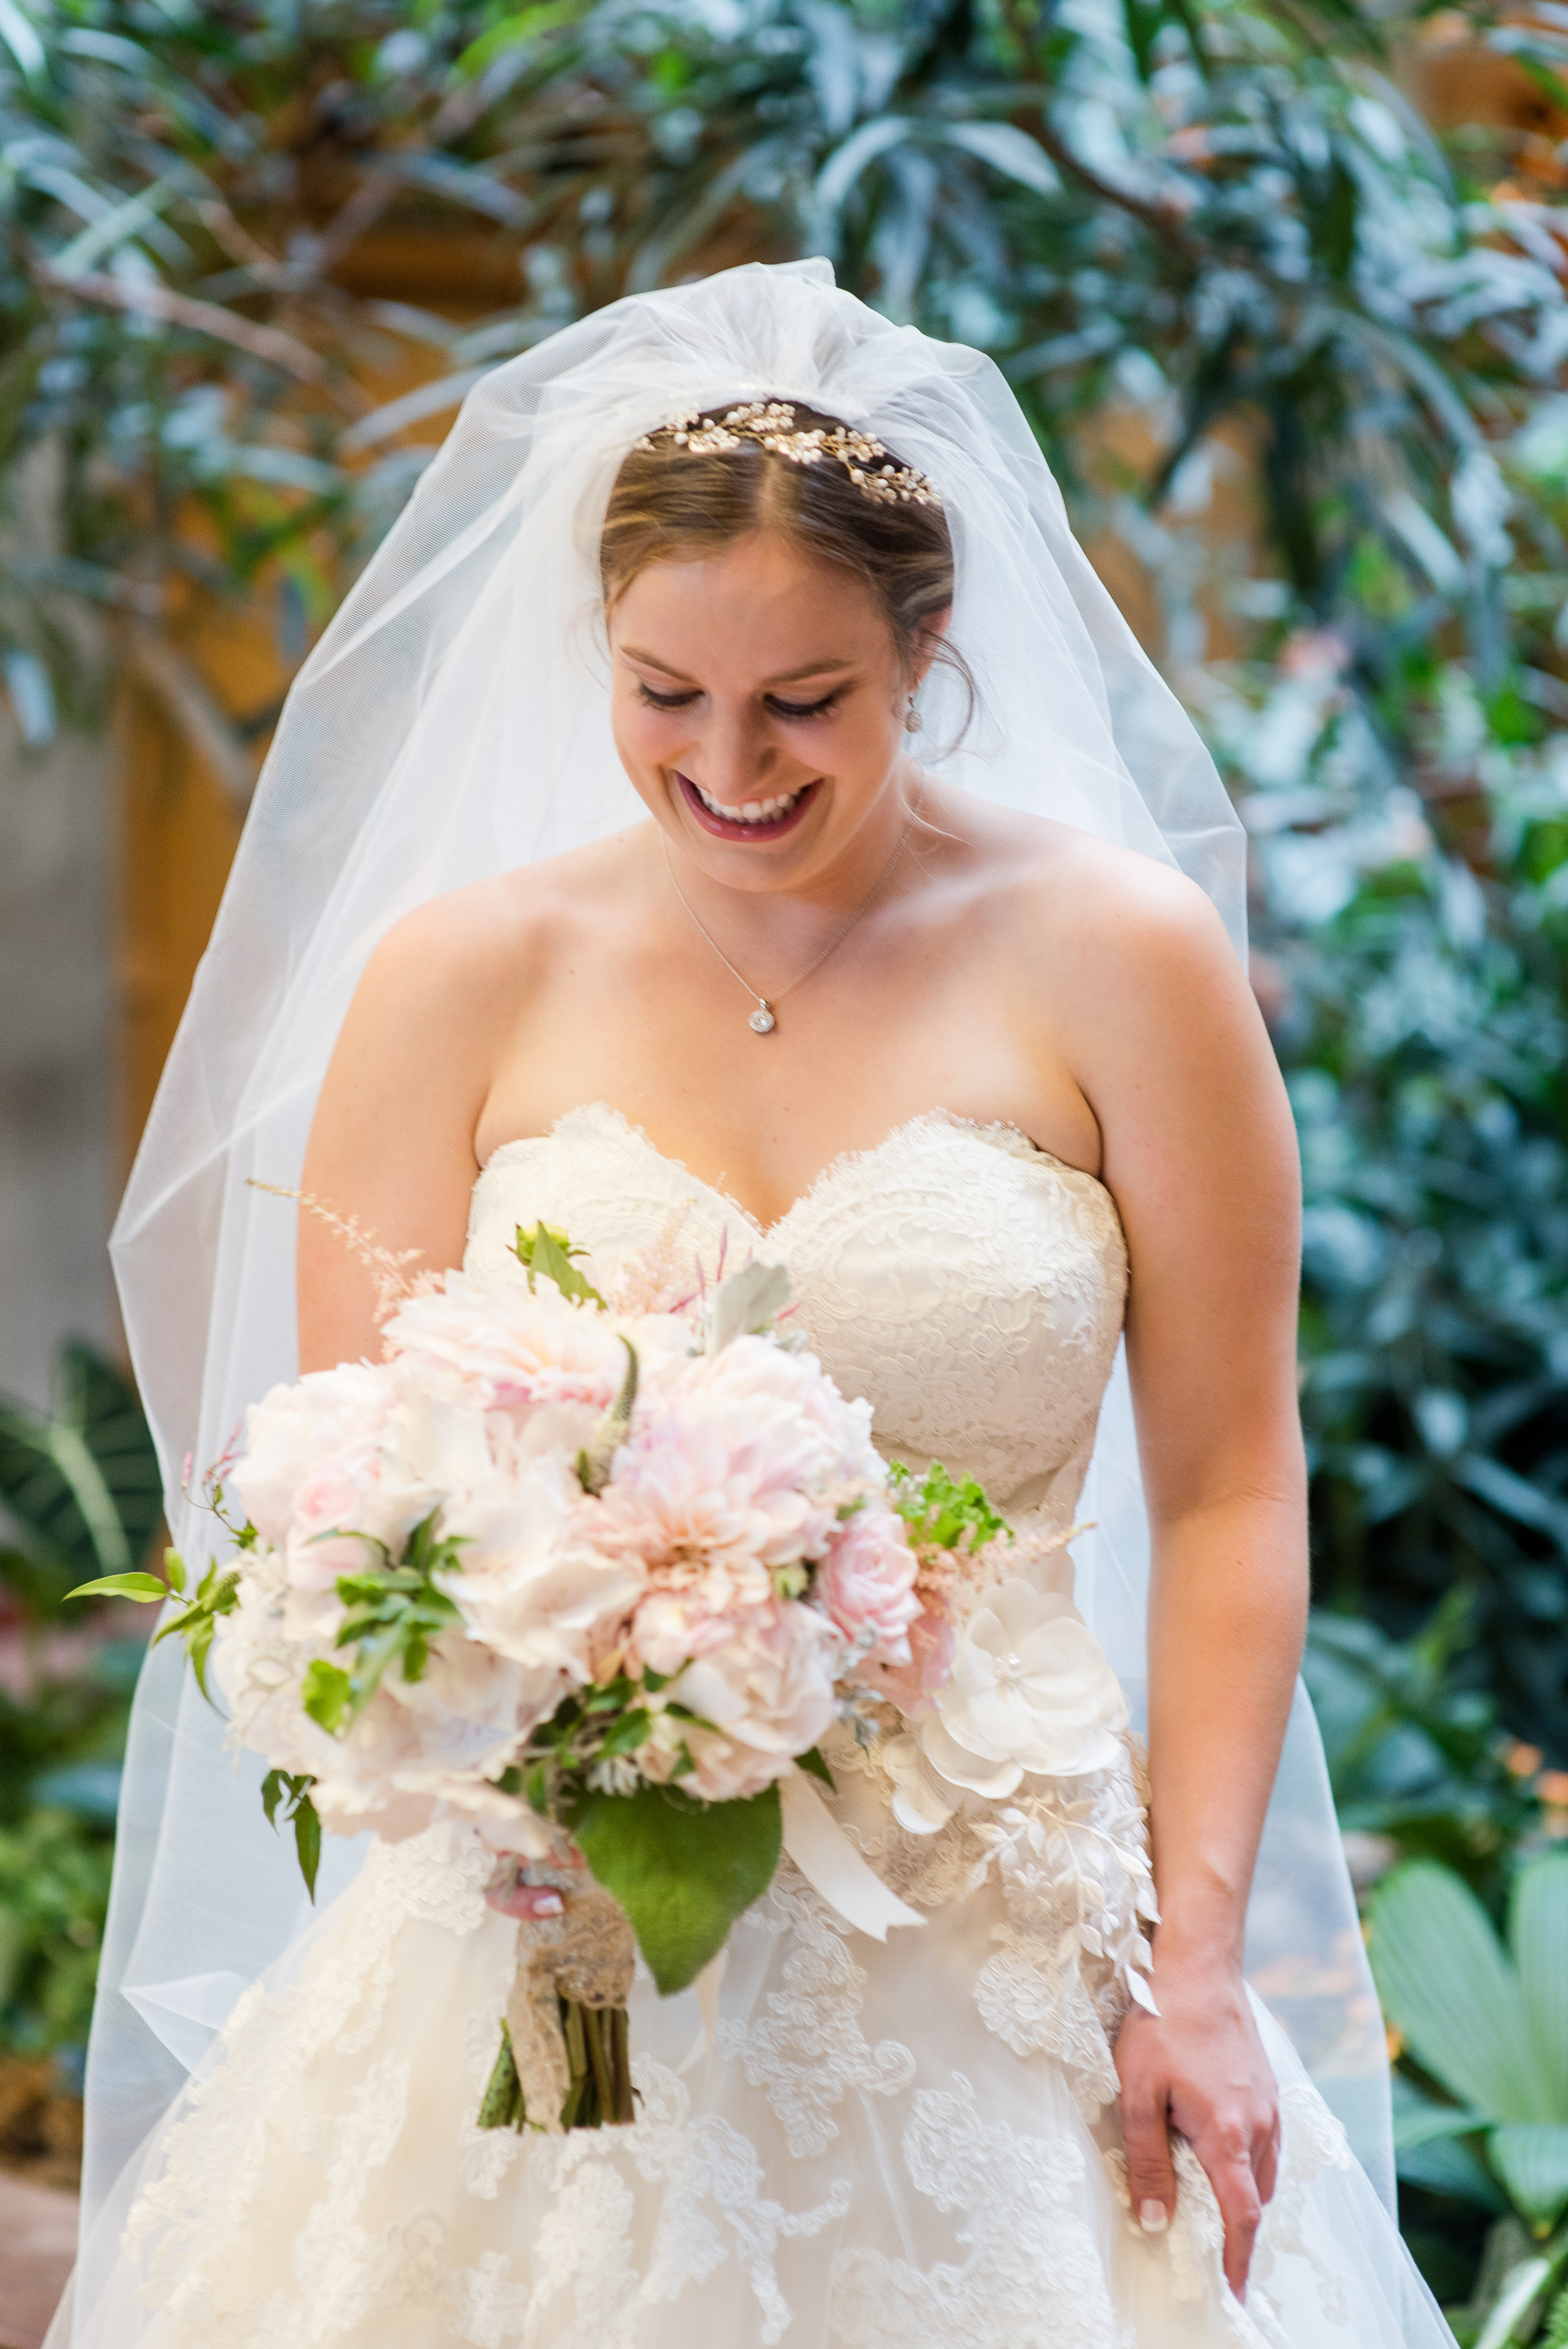  Denver Botanic Garden Wedding | Liancarlo gown from Little White Dress | Kara Pearson Photography 